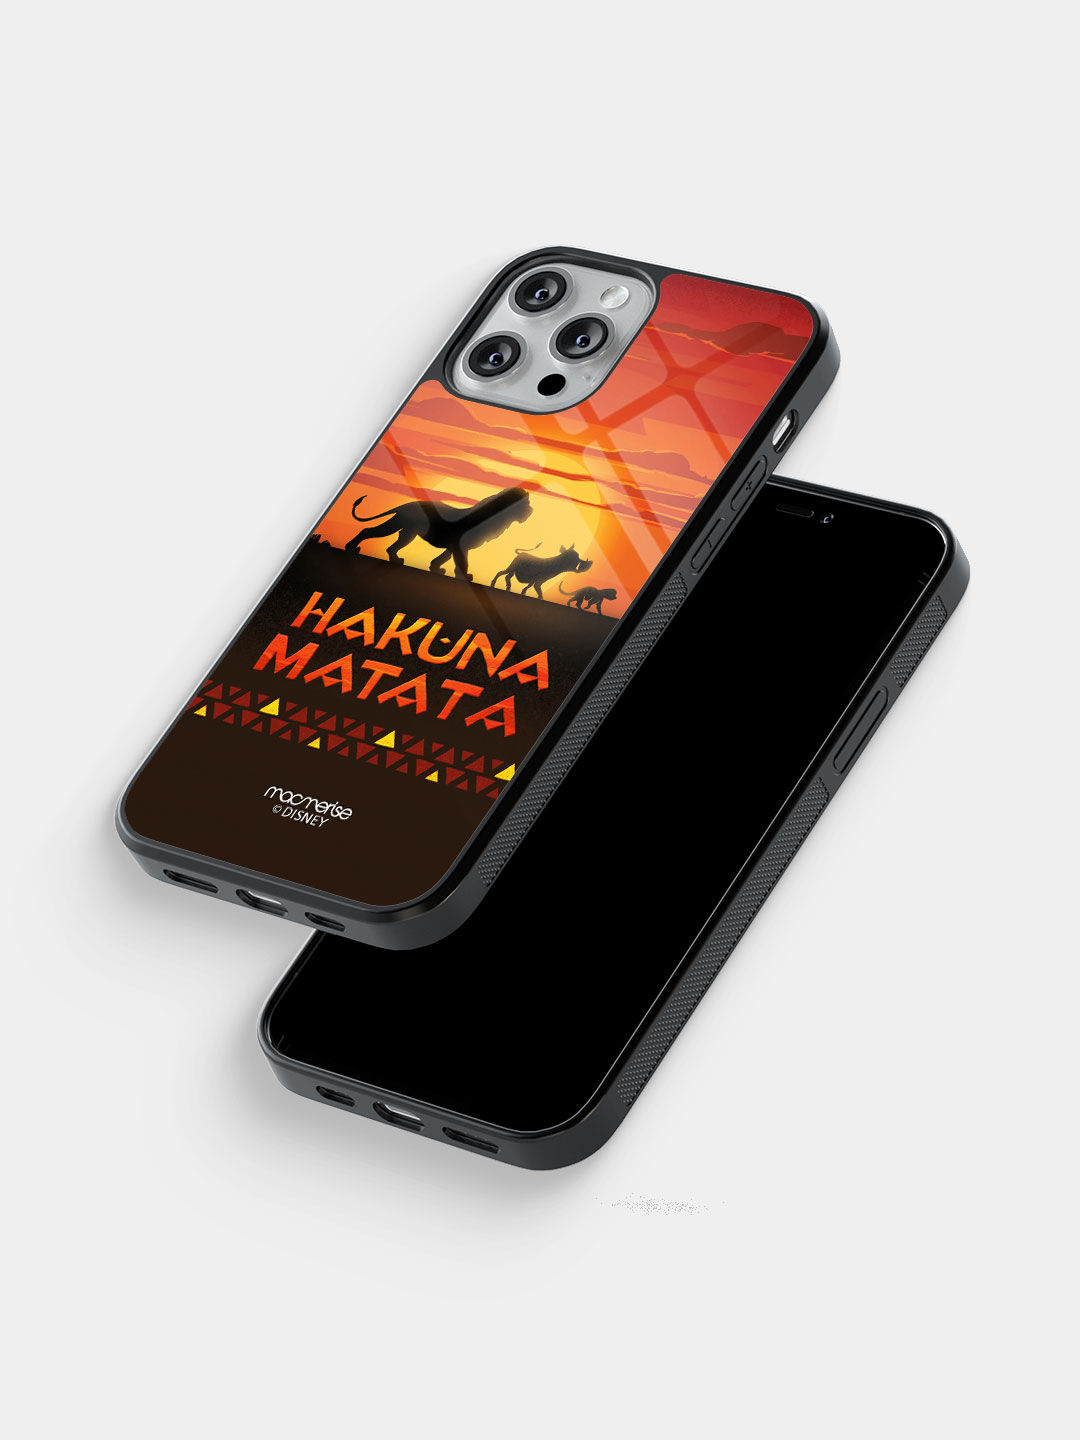 keep calm and hakuna matata iphone case